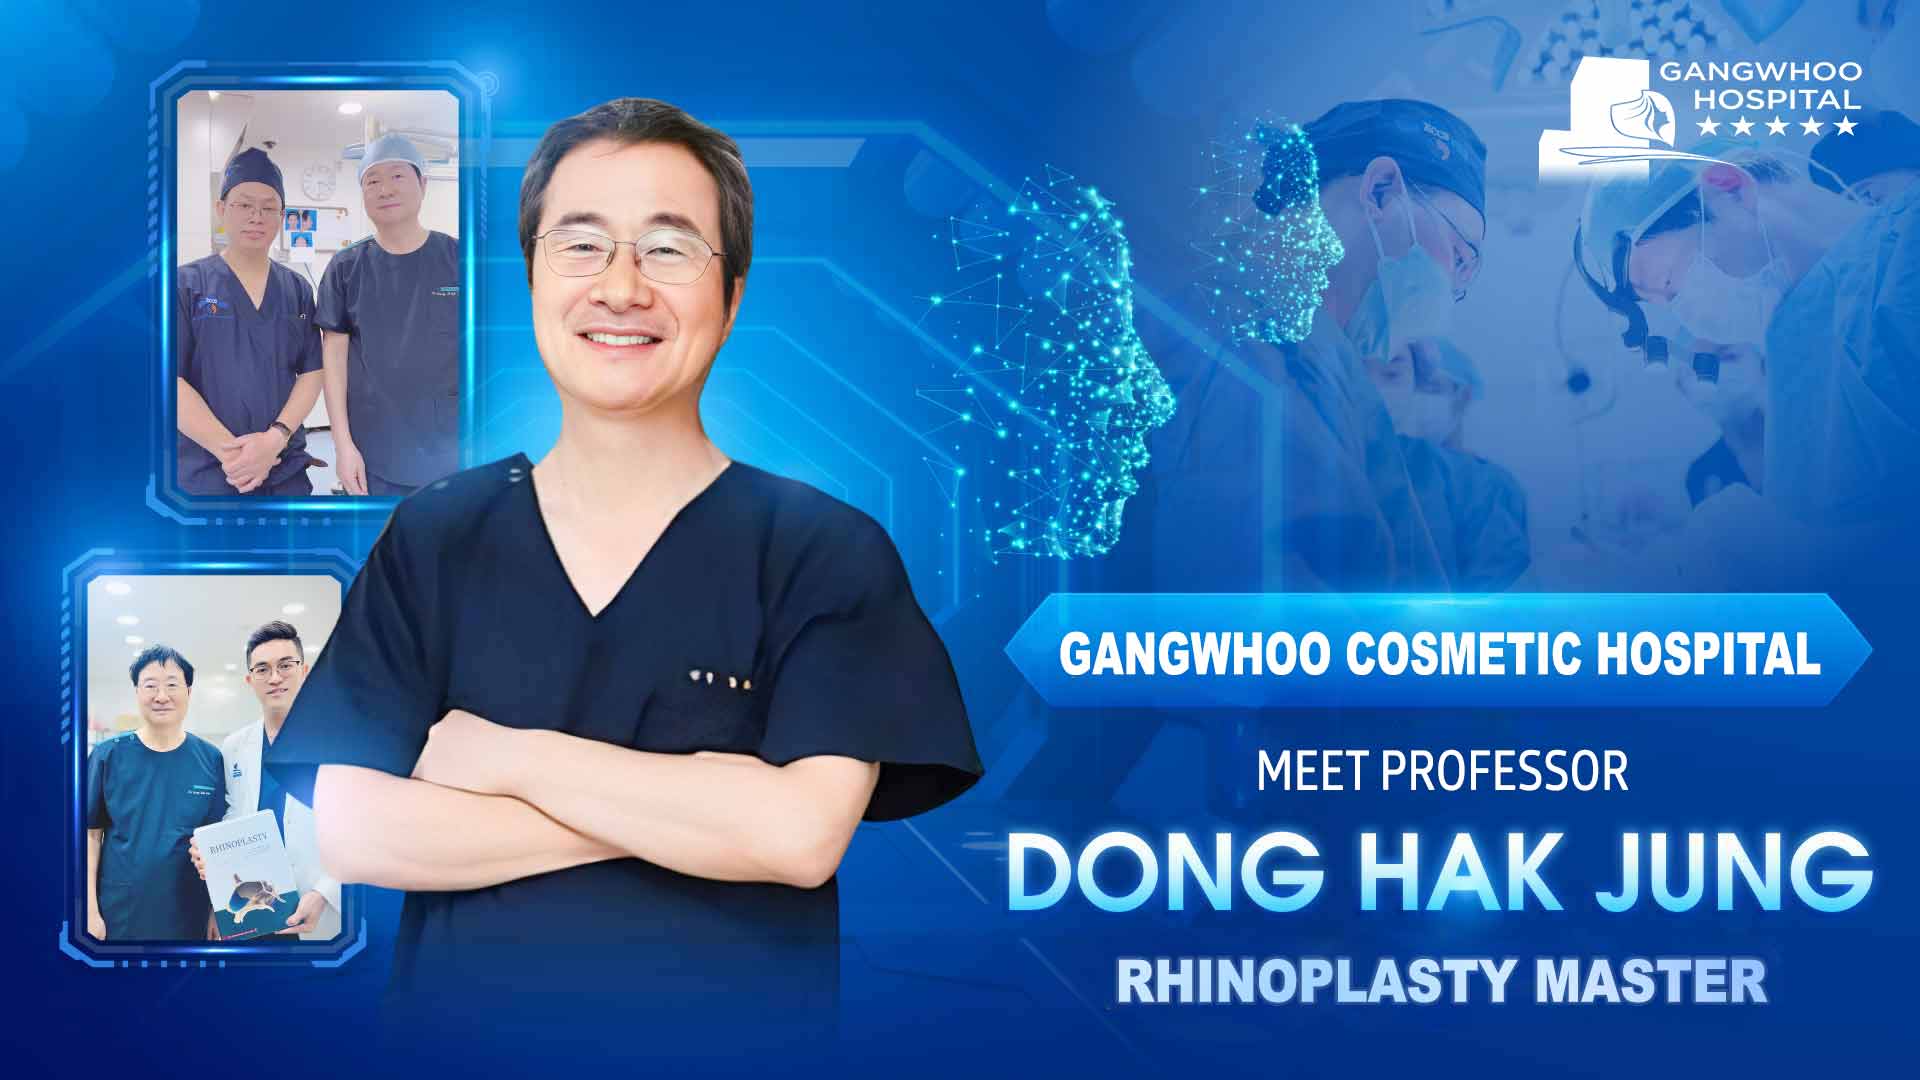 Gangwhoo Cosmetic Hospital Meet Professor Dong Hak Jung